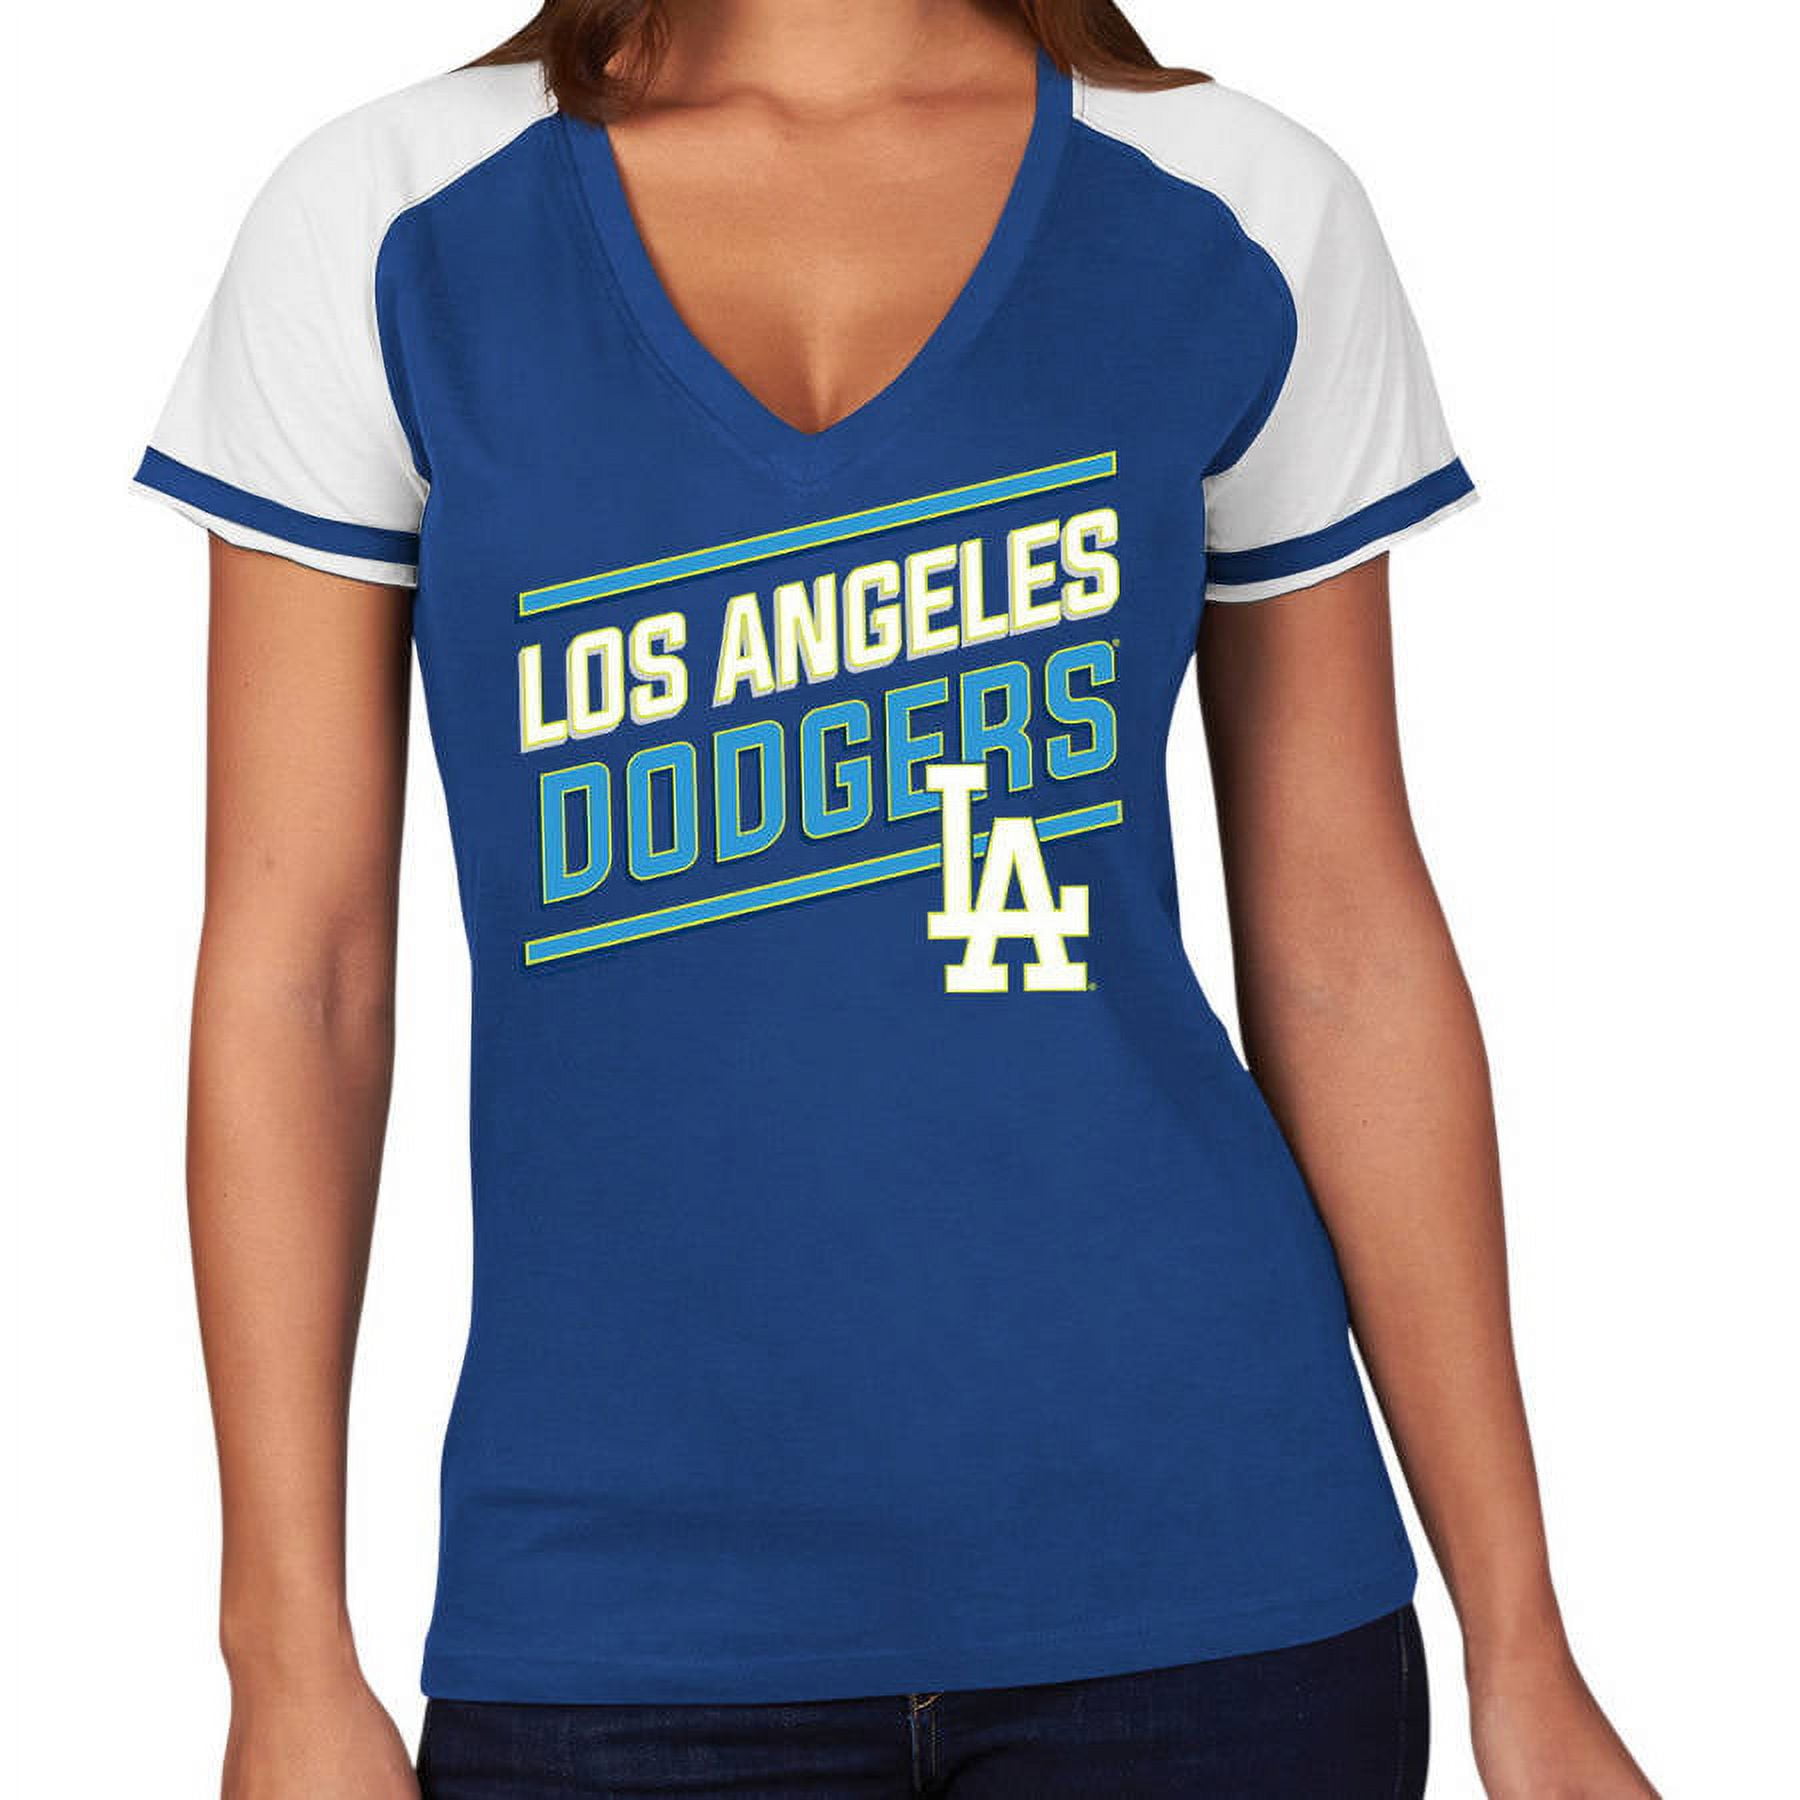 MLB Los Angeles Dodgers Plus Size Women's Basic Tee 